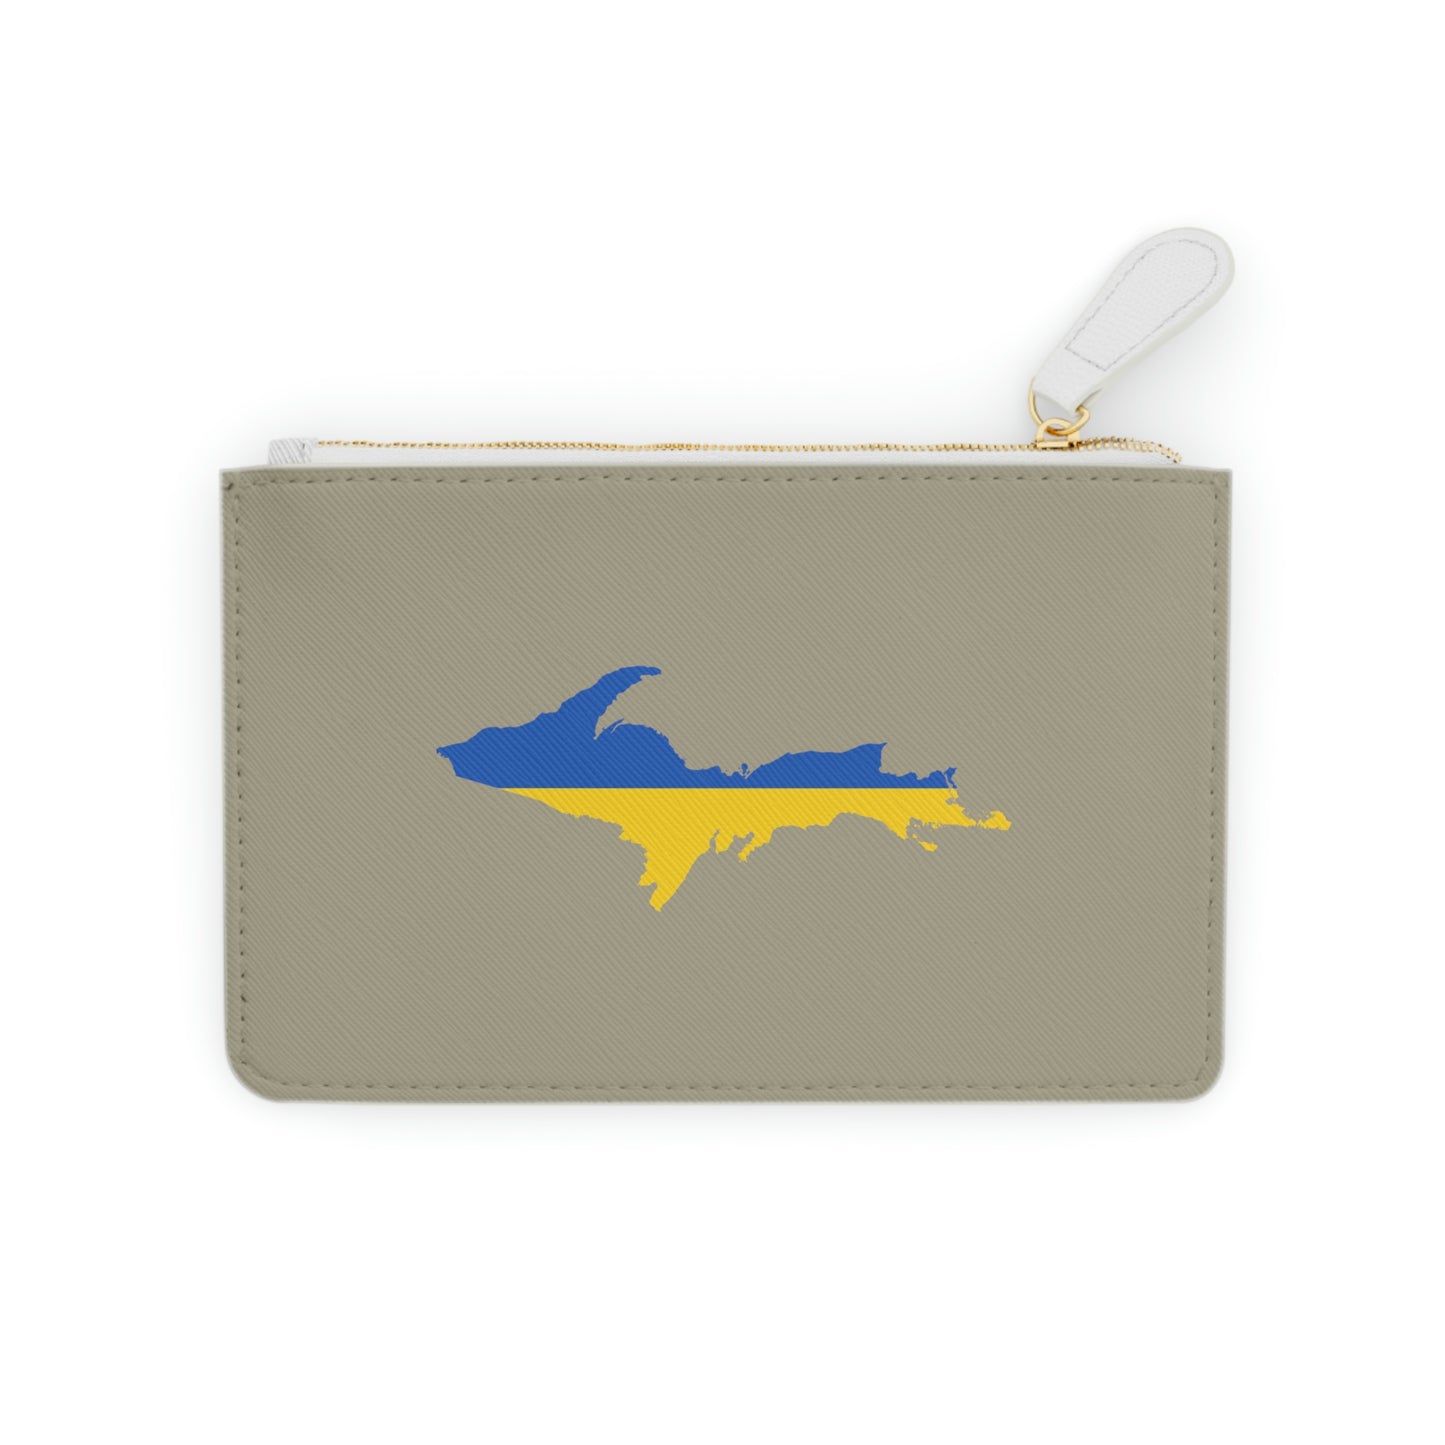 Michigan Upper Peninsula Mini Clutch Bag (Petoskey Stone Beige w/ UP Ukraine Flag Outline)